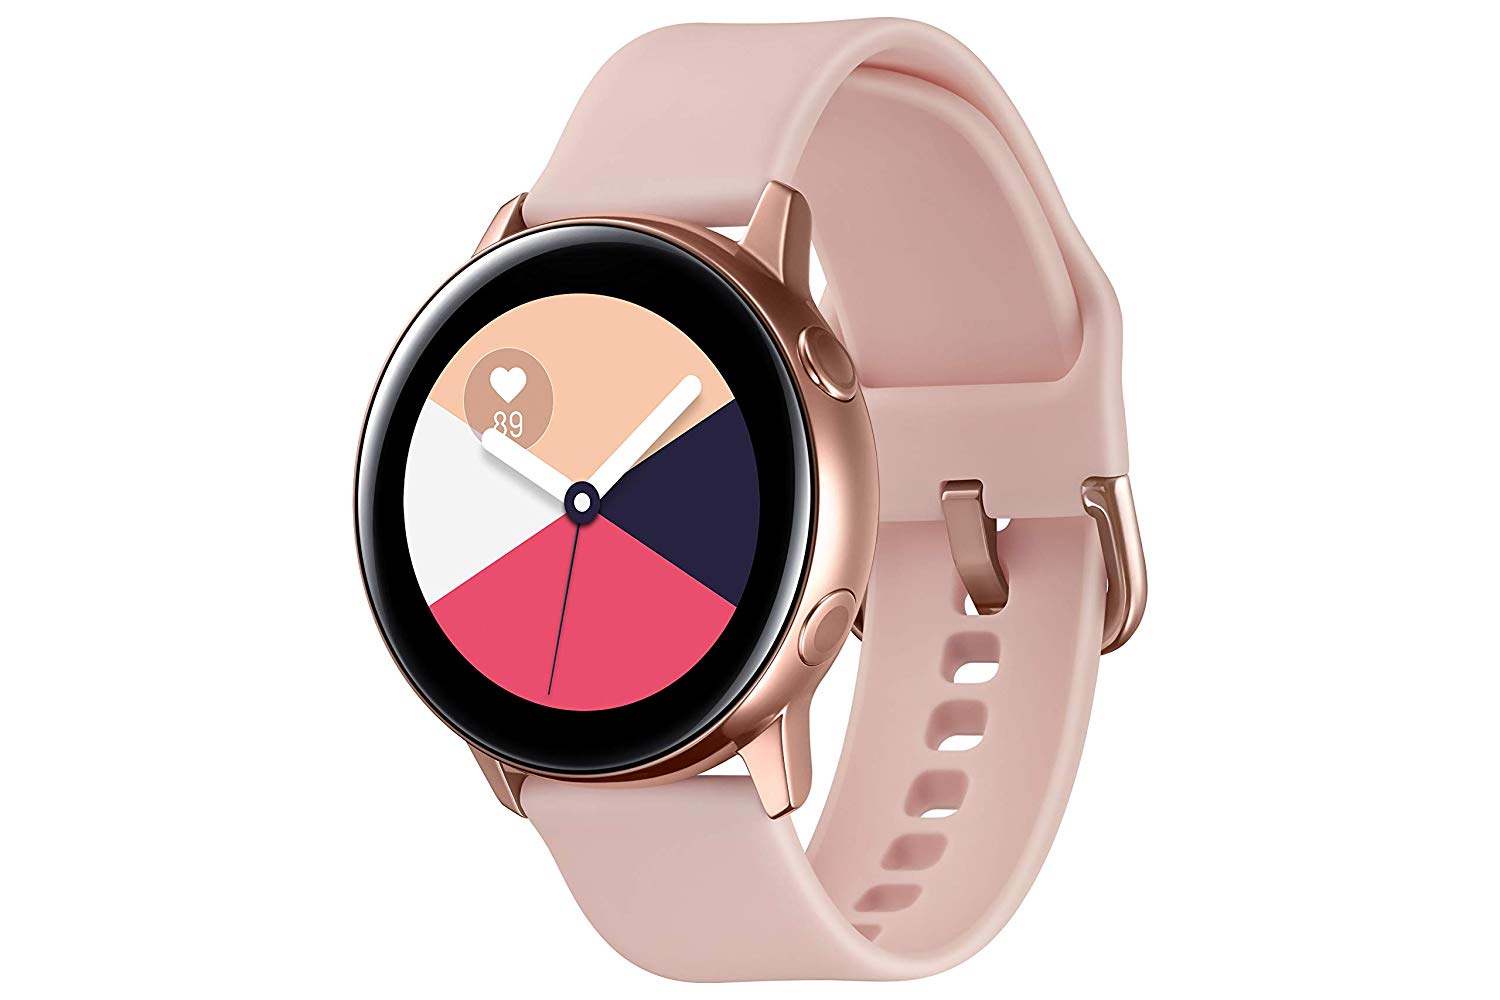 samsung galaxy watch active - best fitness smartwatch for women